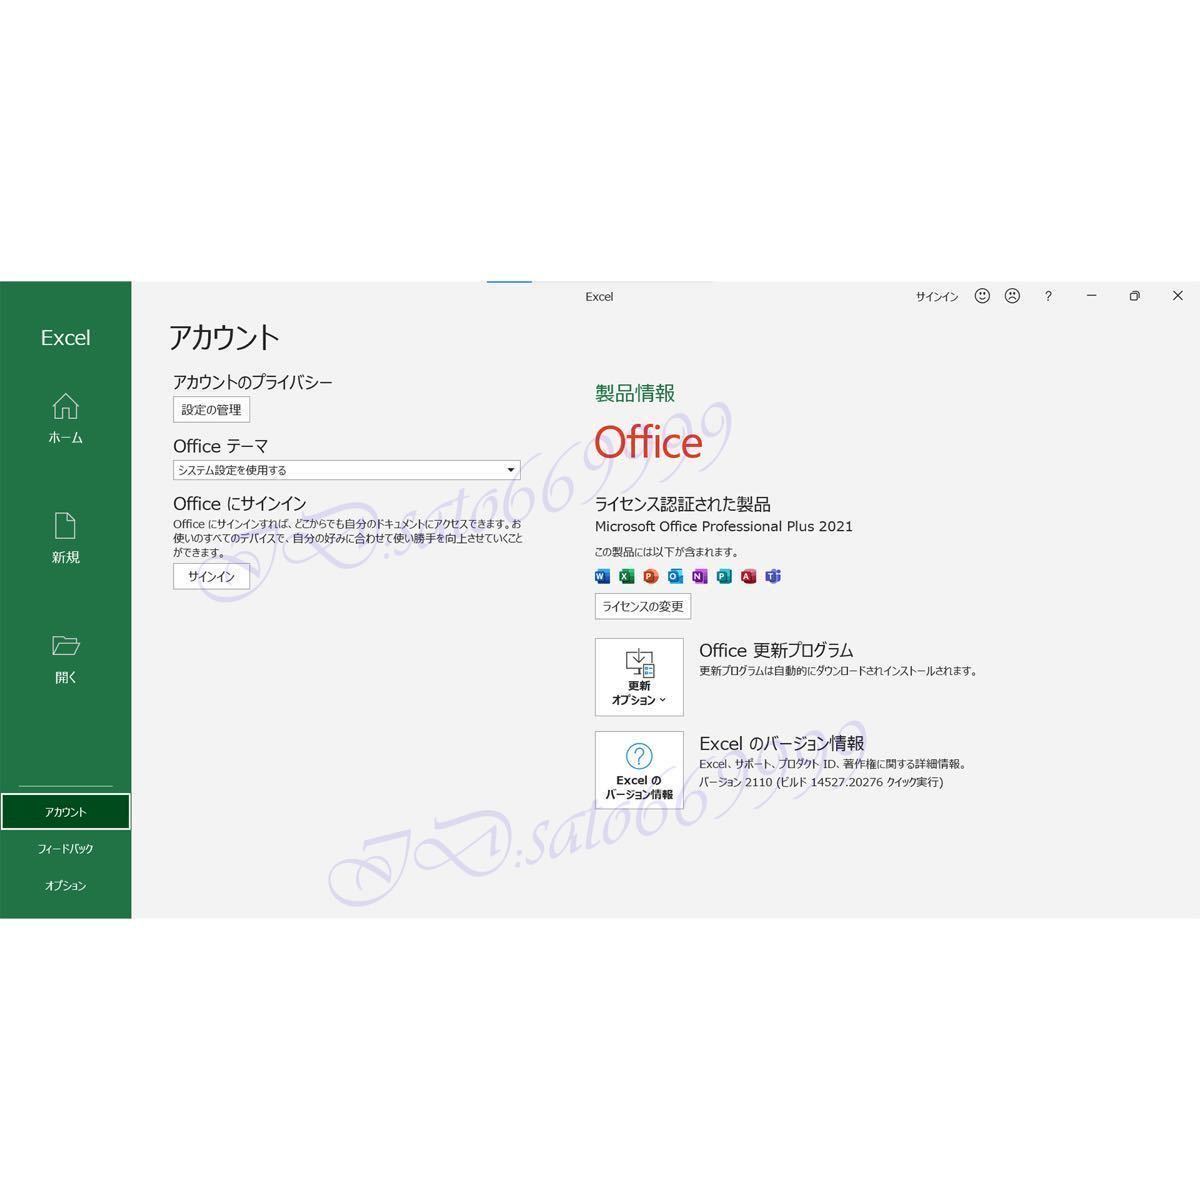 Microsoft Office 2021 Professional Plus 正規 プロダクトキー 32/64bit対応 Access Word Excel PowerPoint 認証保証 日本語 永続版の画像6